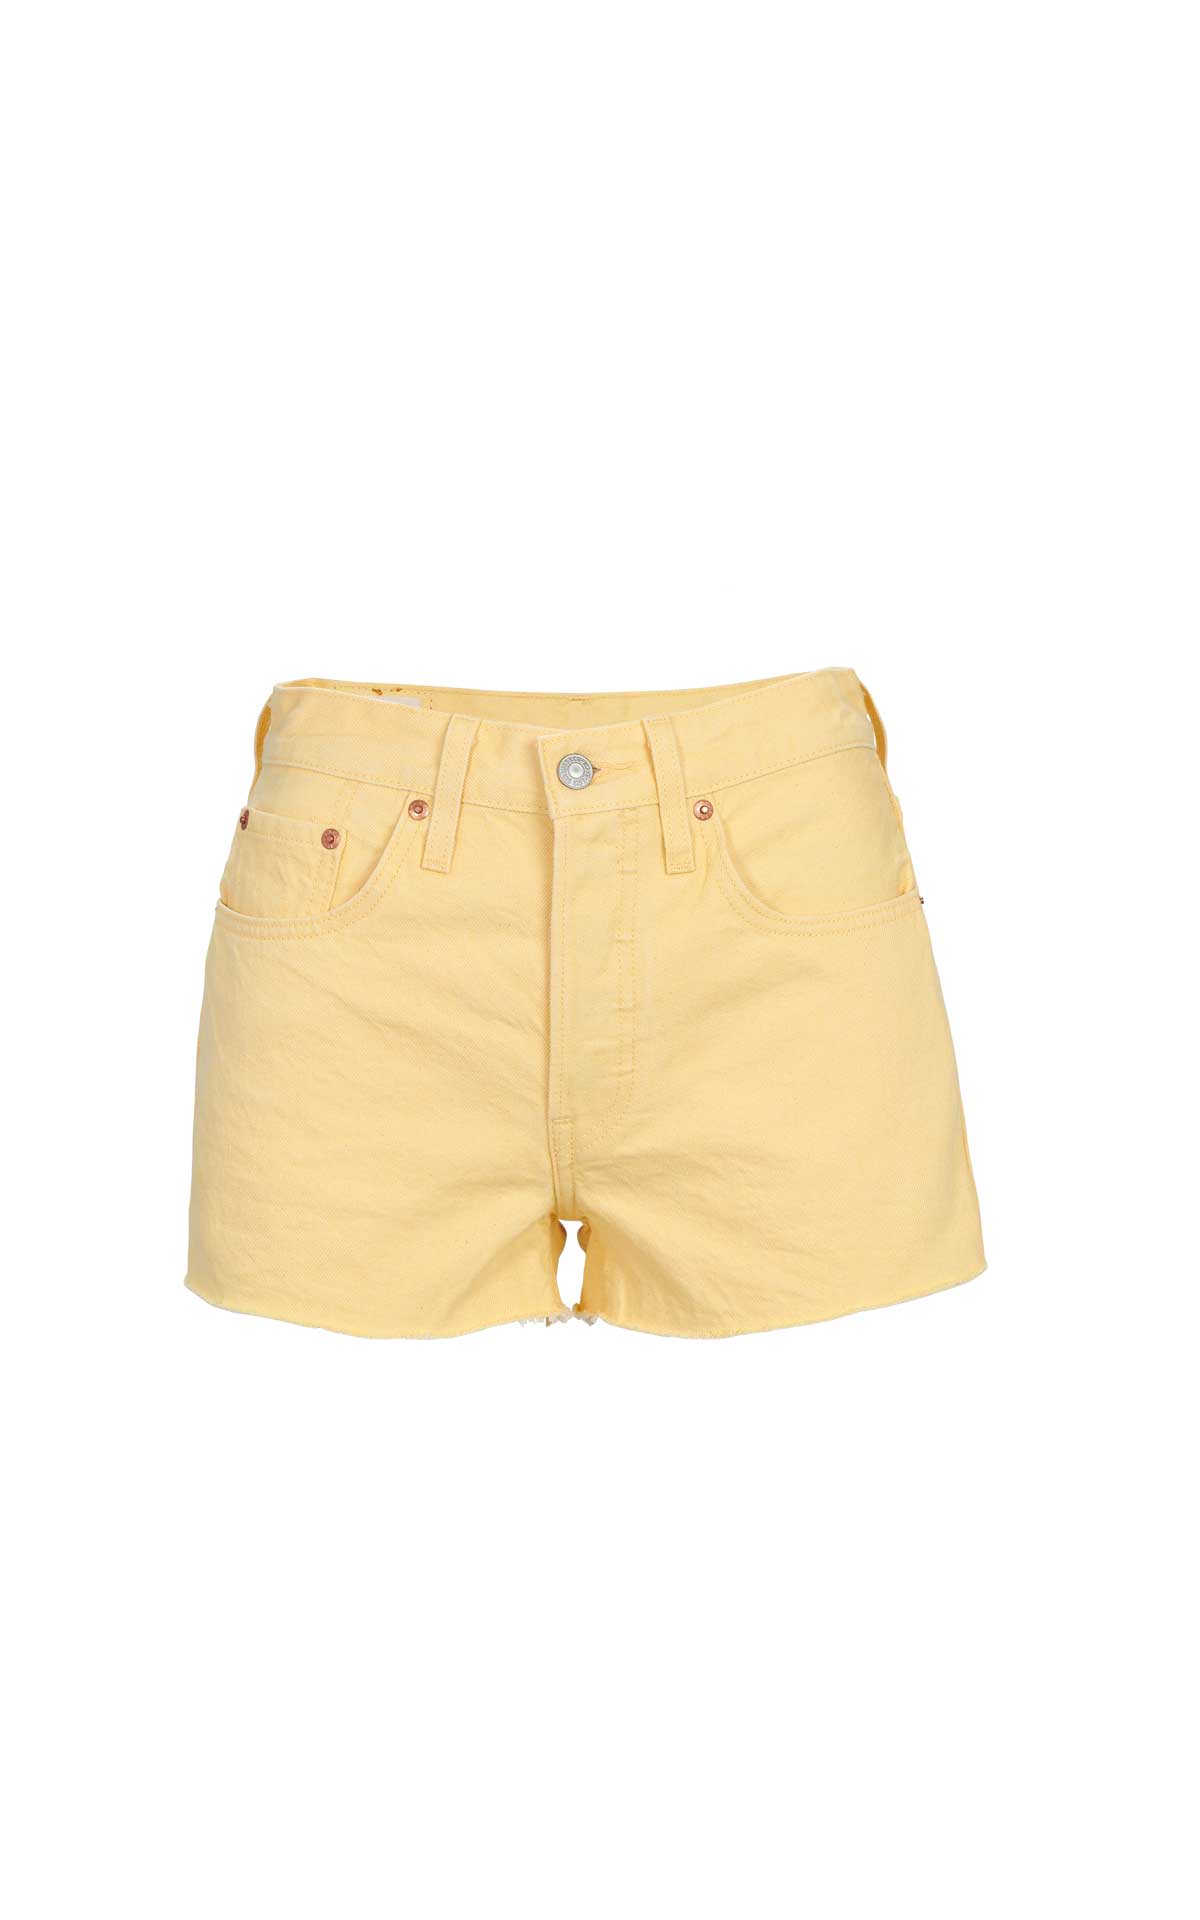 Women's yellow shorts Levis